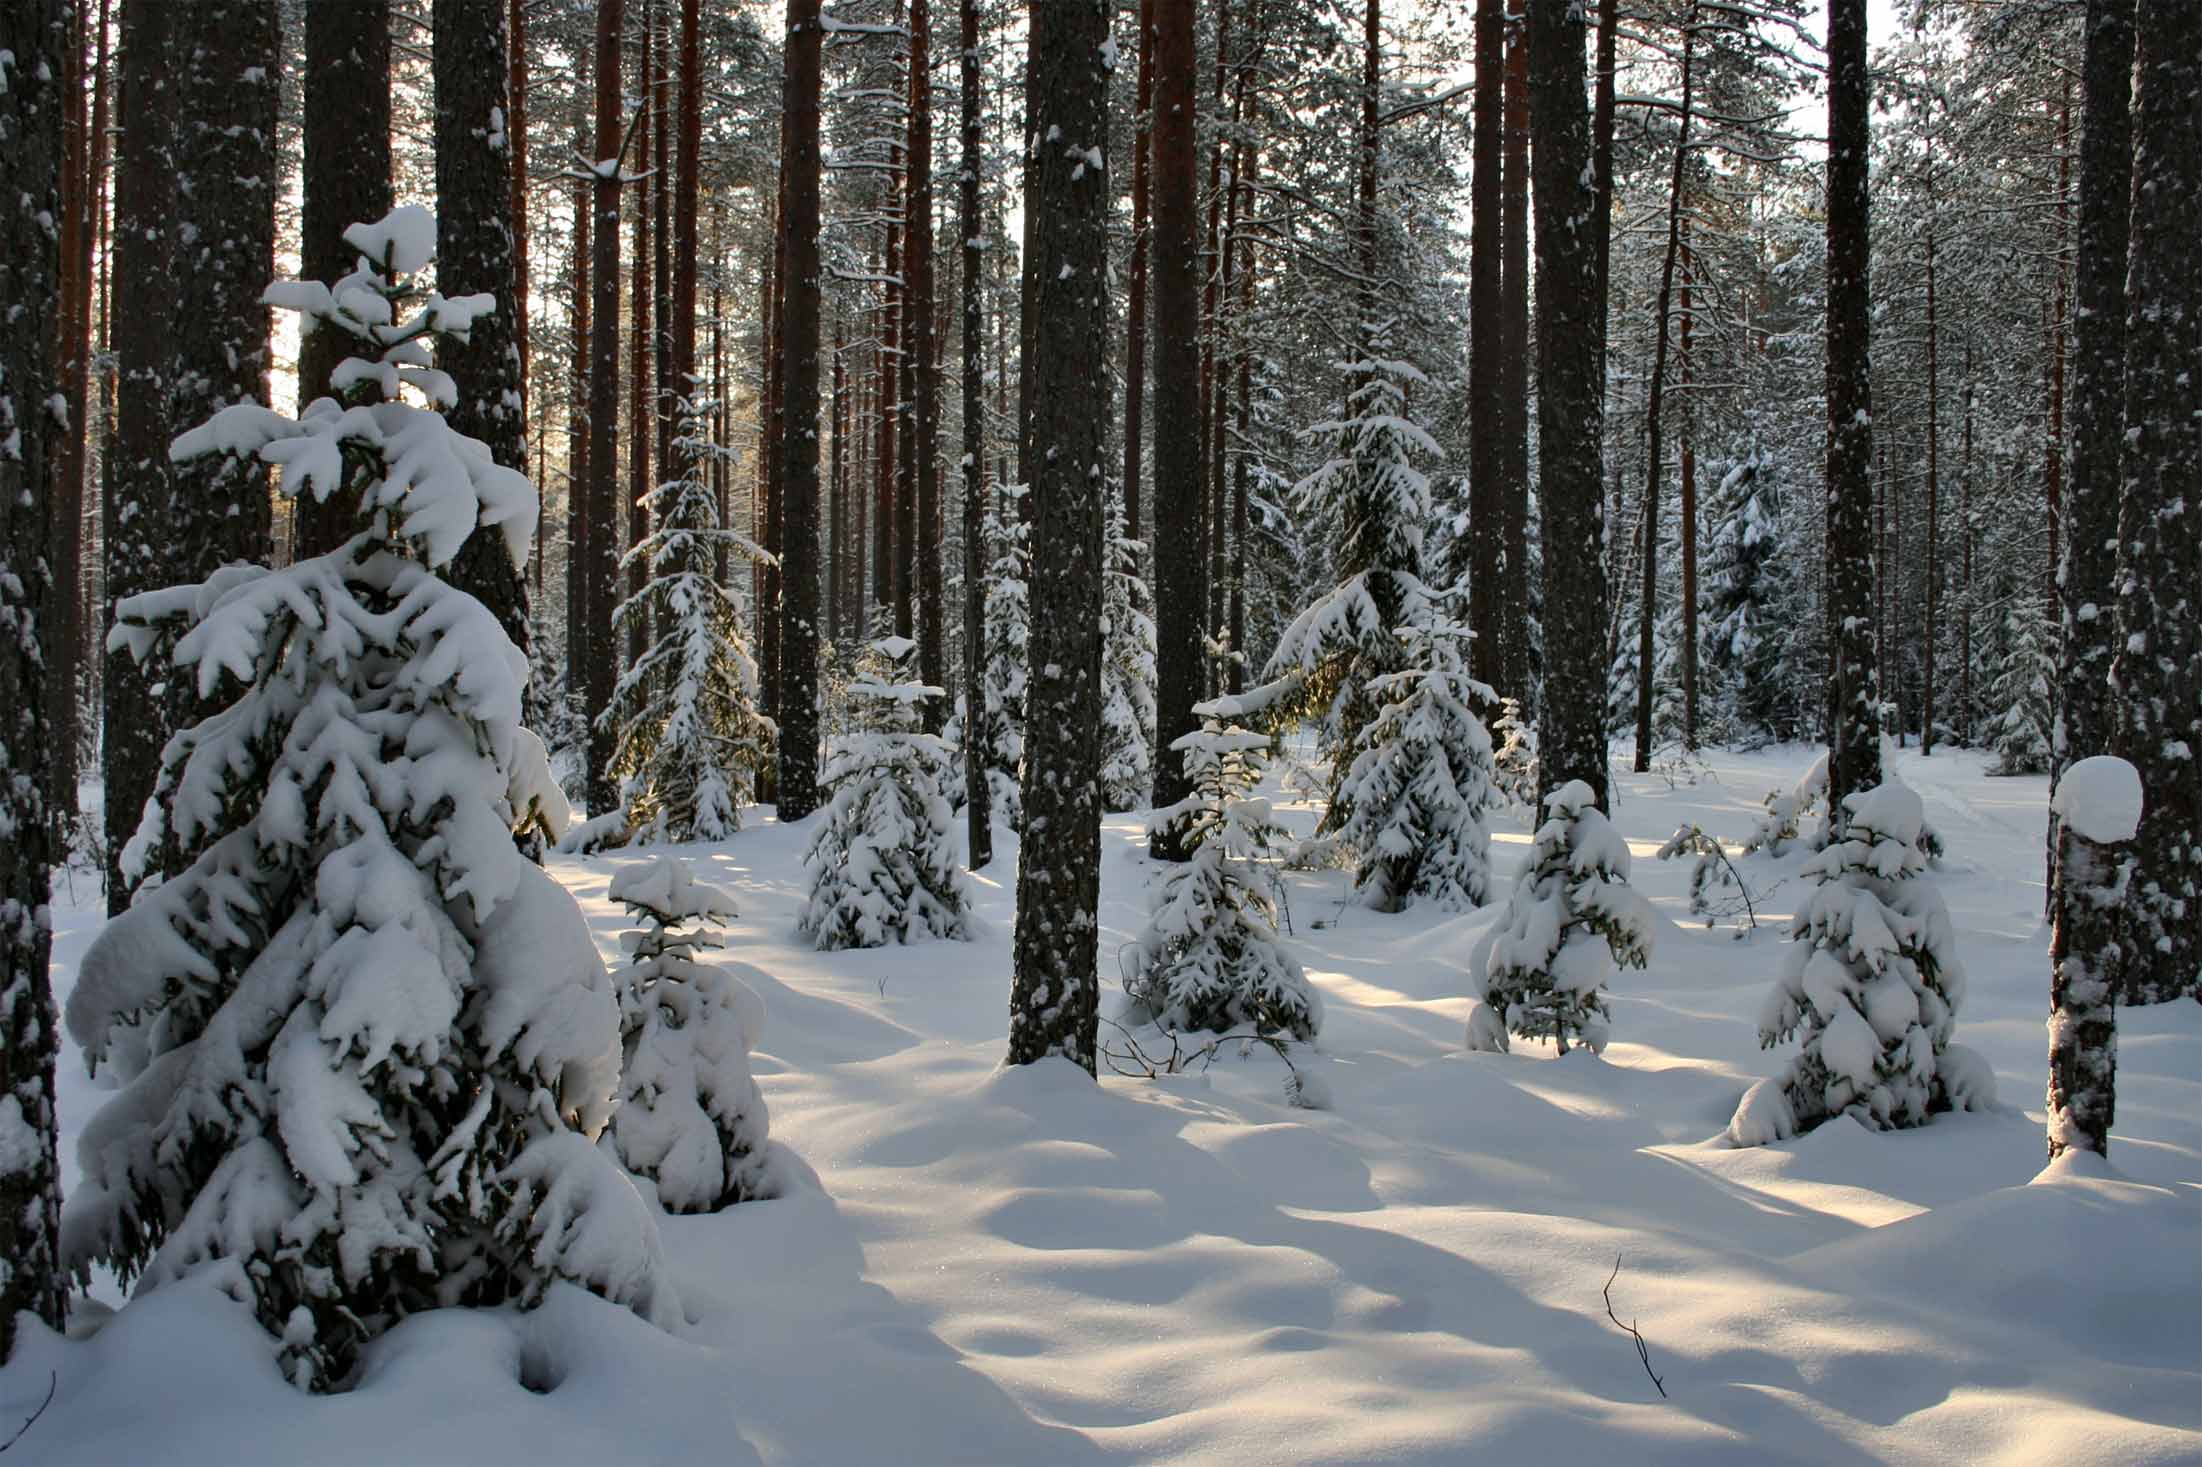 Winter forest. Зимний лес. Зимой в лесу. Русский лес зимой. Снежный лес.